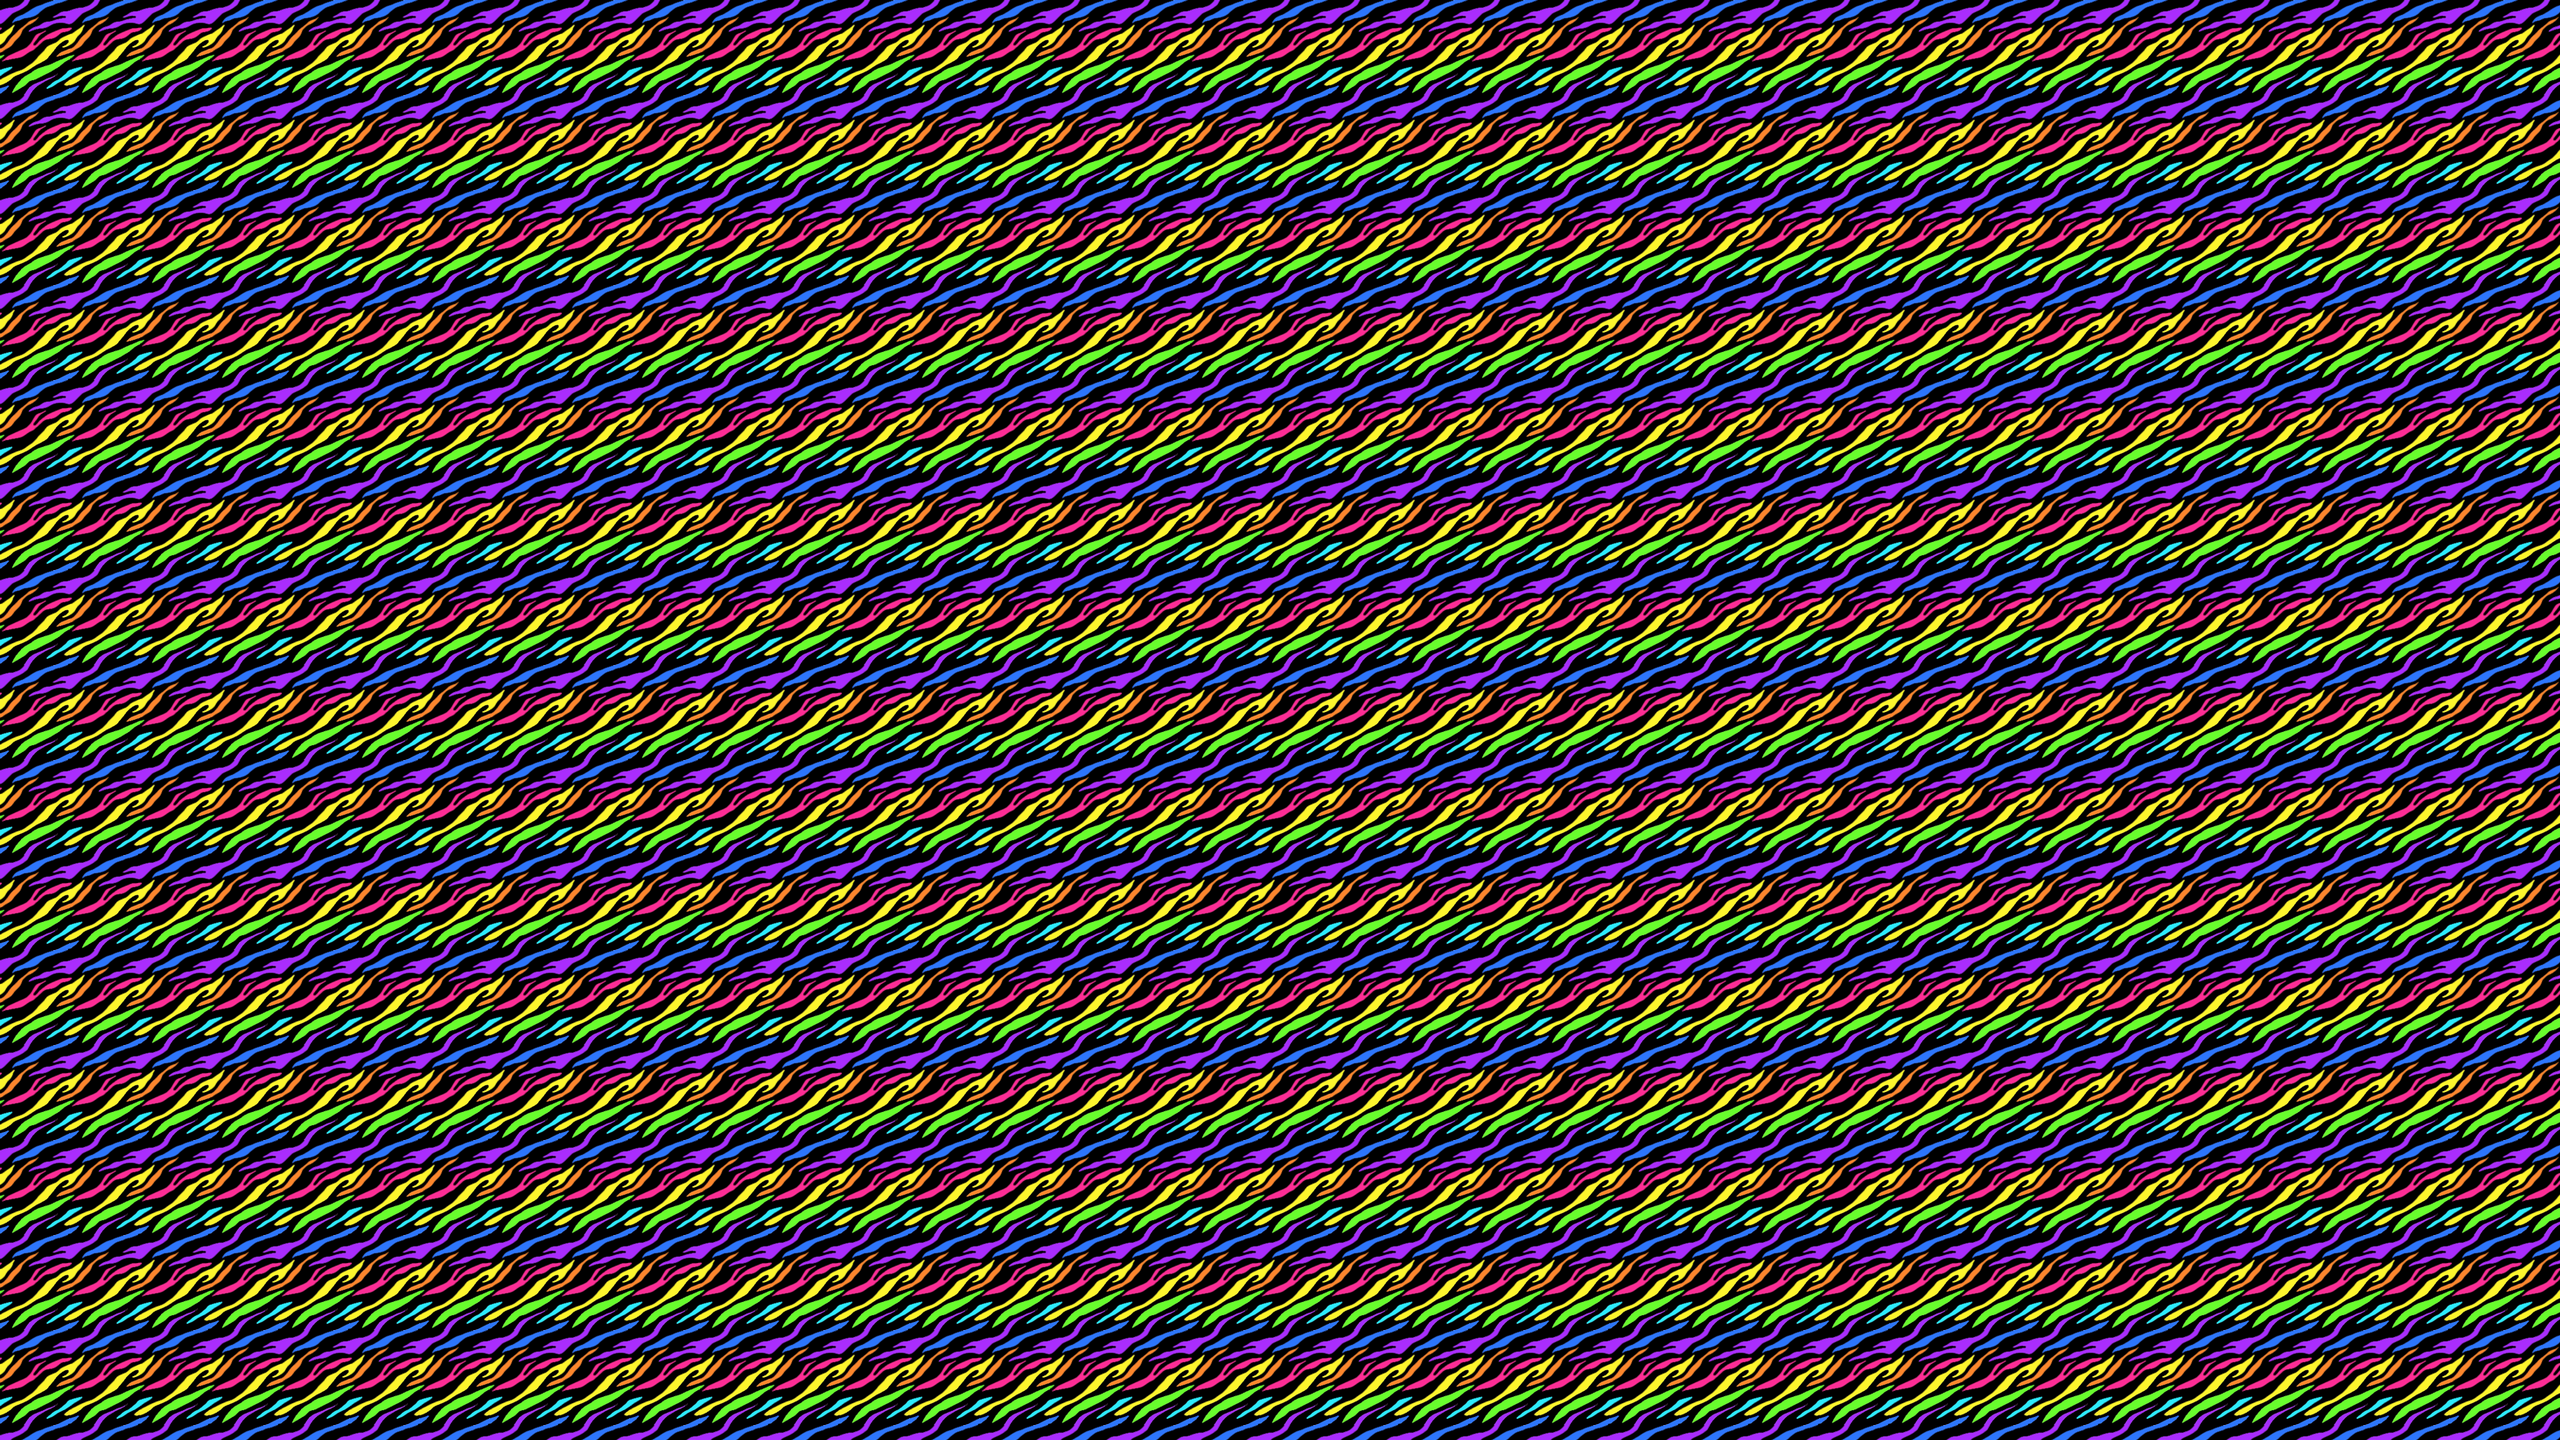 This Rainbow Zebra Desktop Wallpaper Is Easy Just Save The